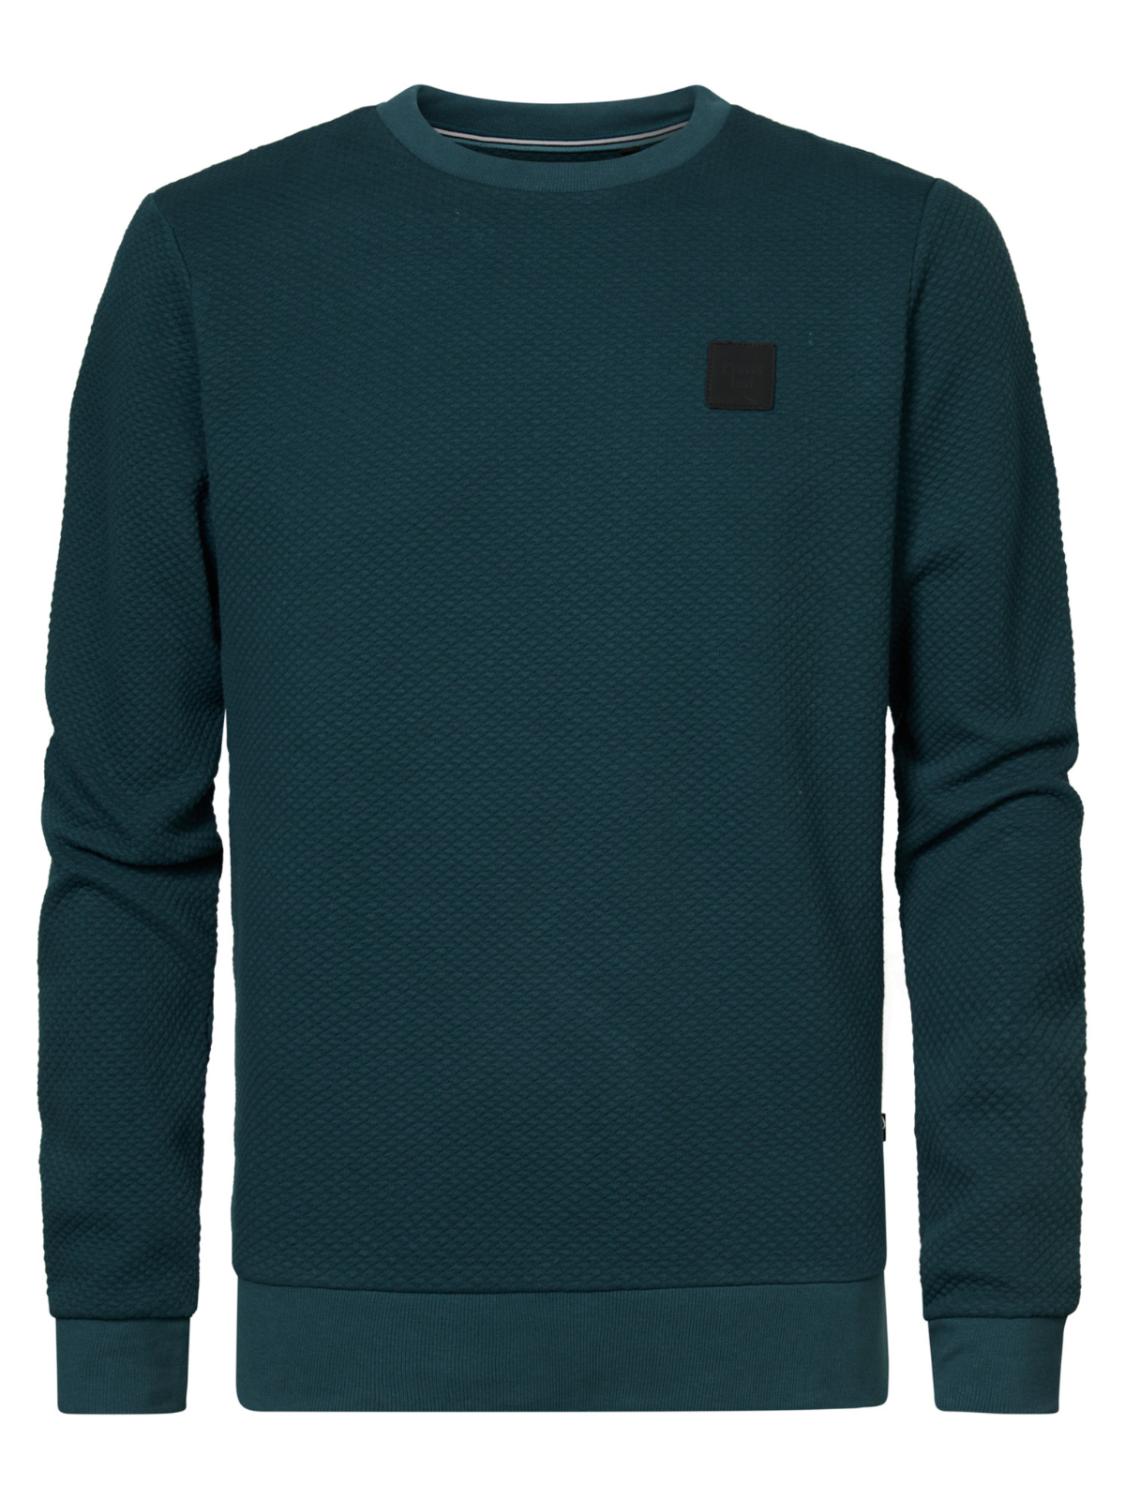 Sweater R neck M-3030-swr386